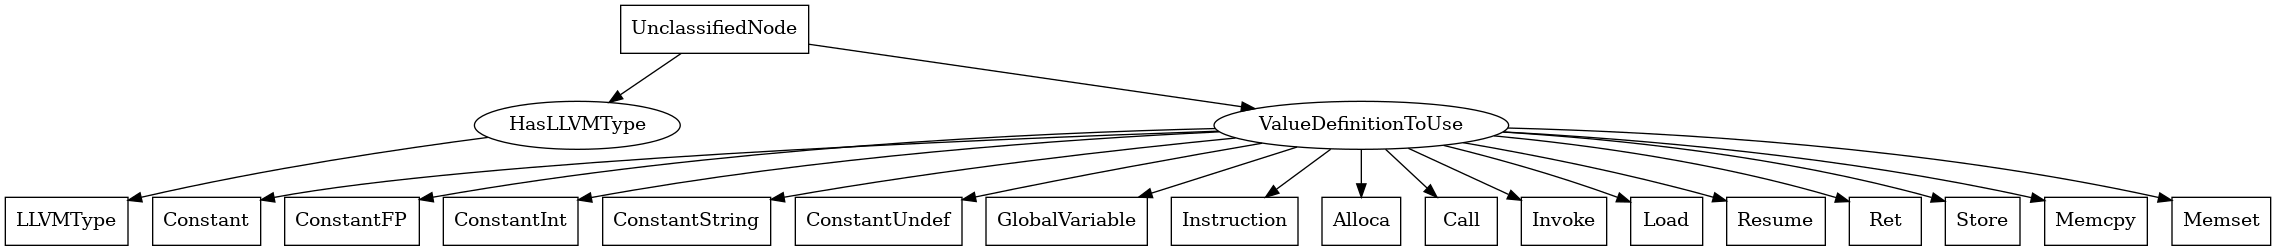 Entity-relationship diagram for UnclassifiedNode nodes